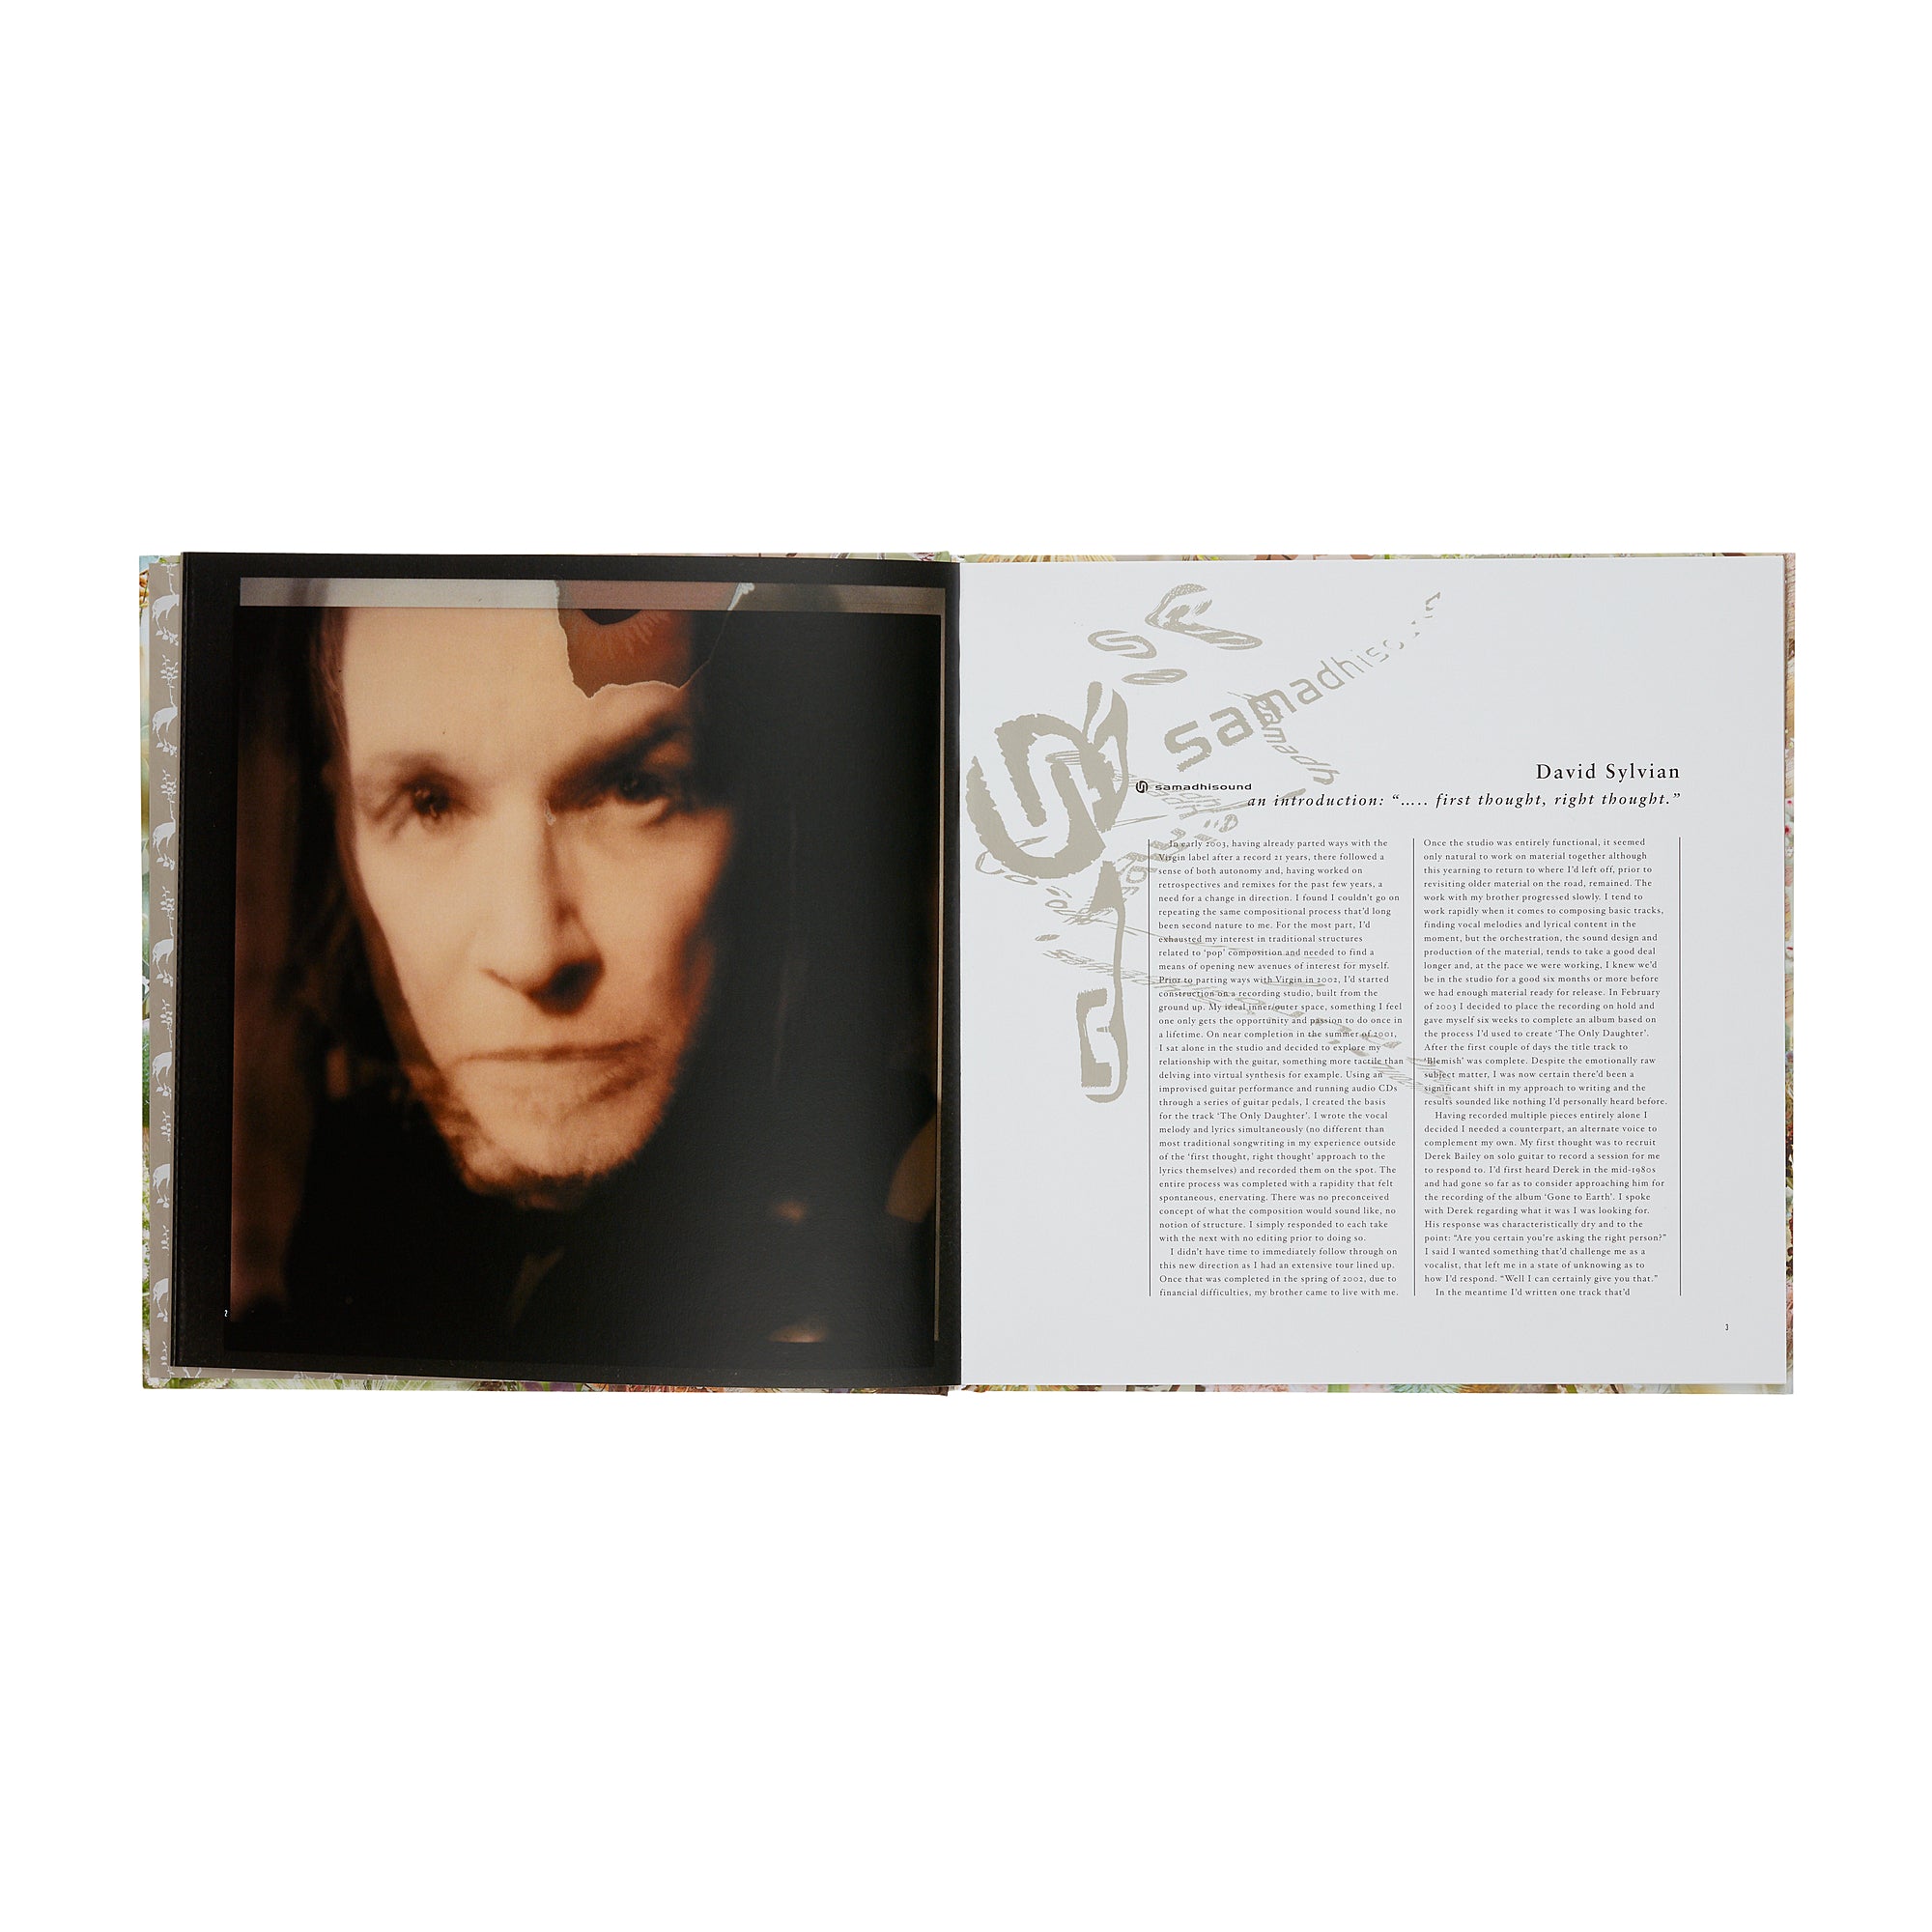 David Sylvian - Do You Know Me Now? (Exclusive 10CD Box Set 